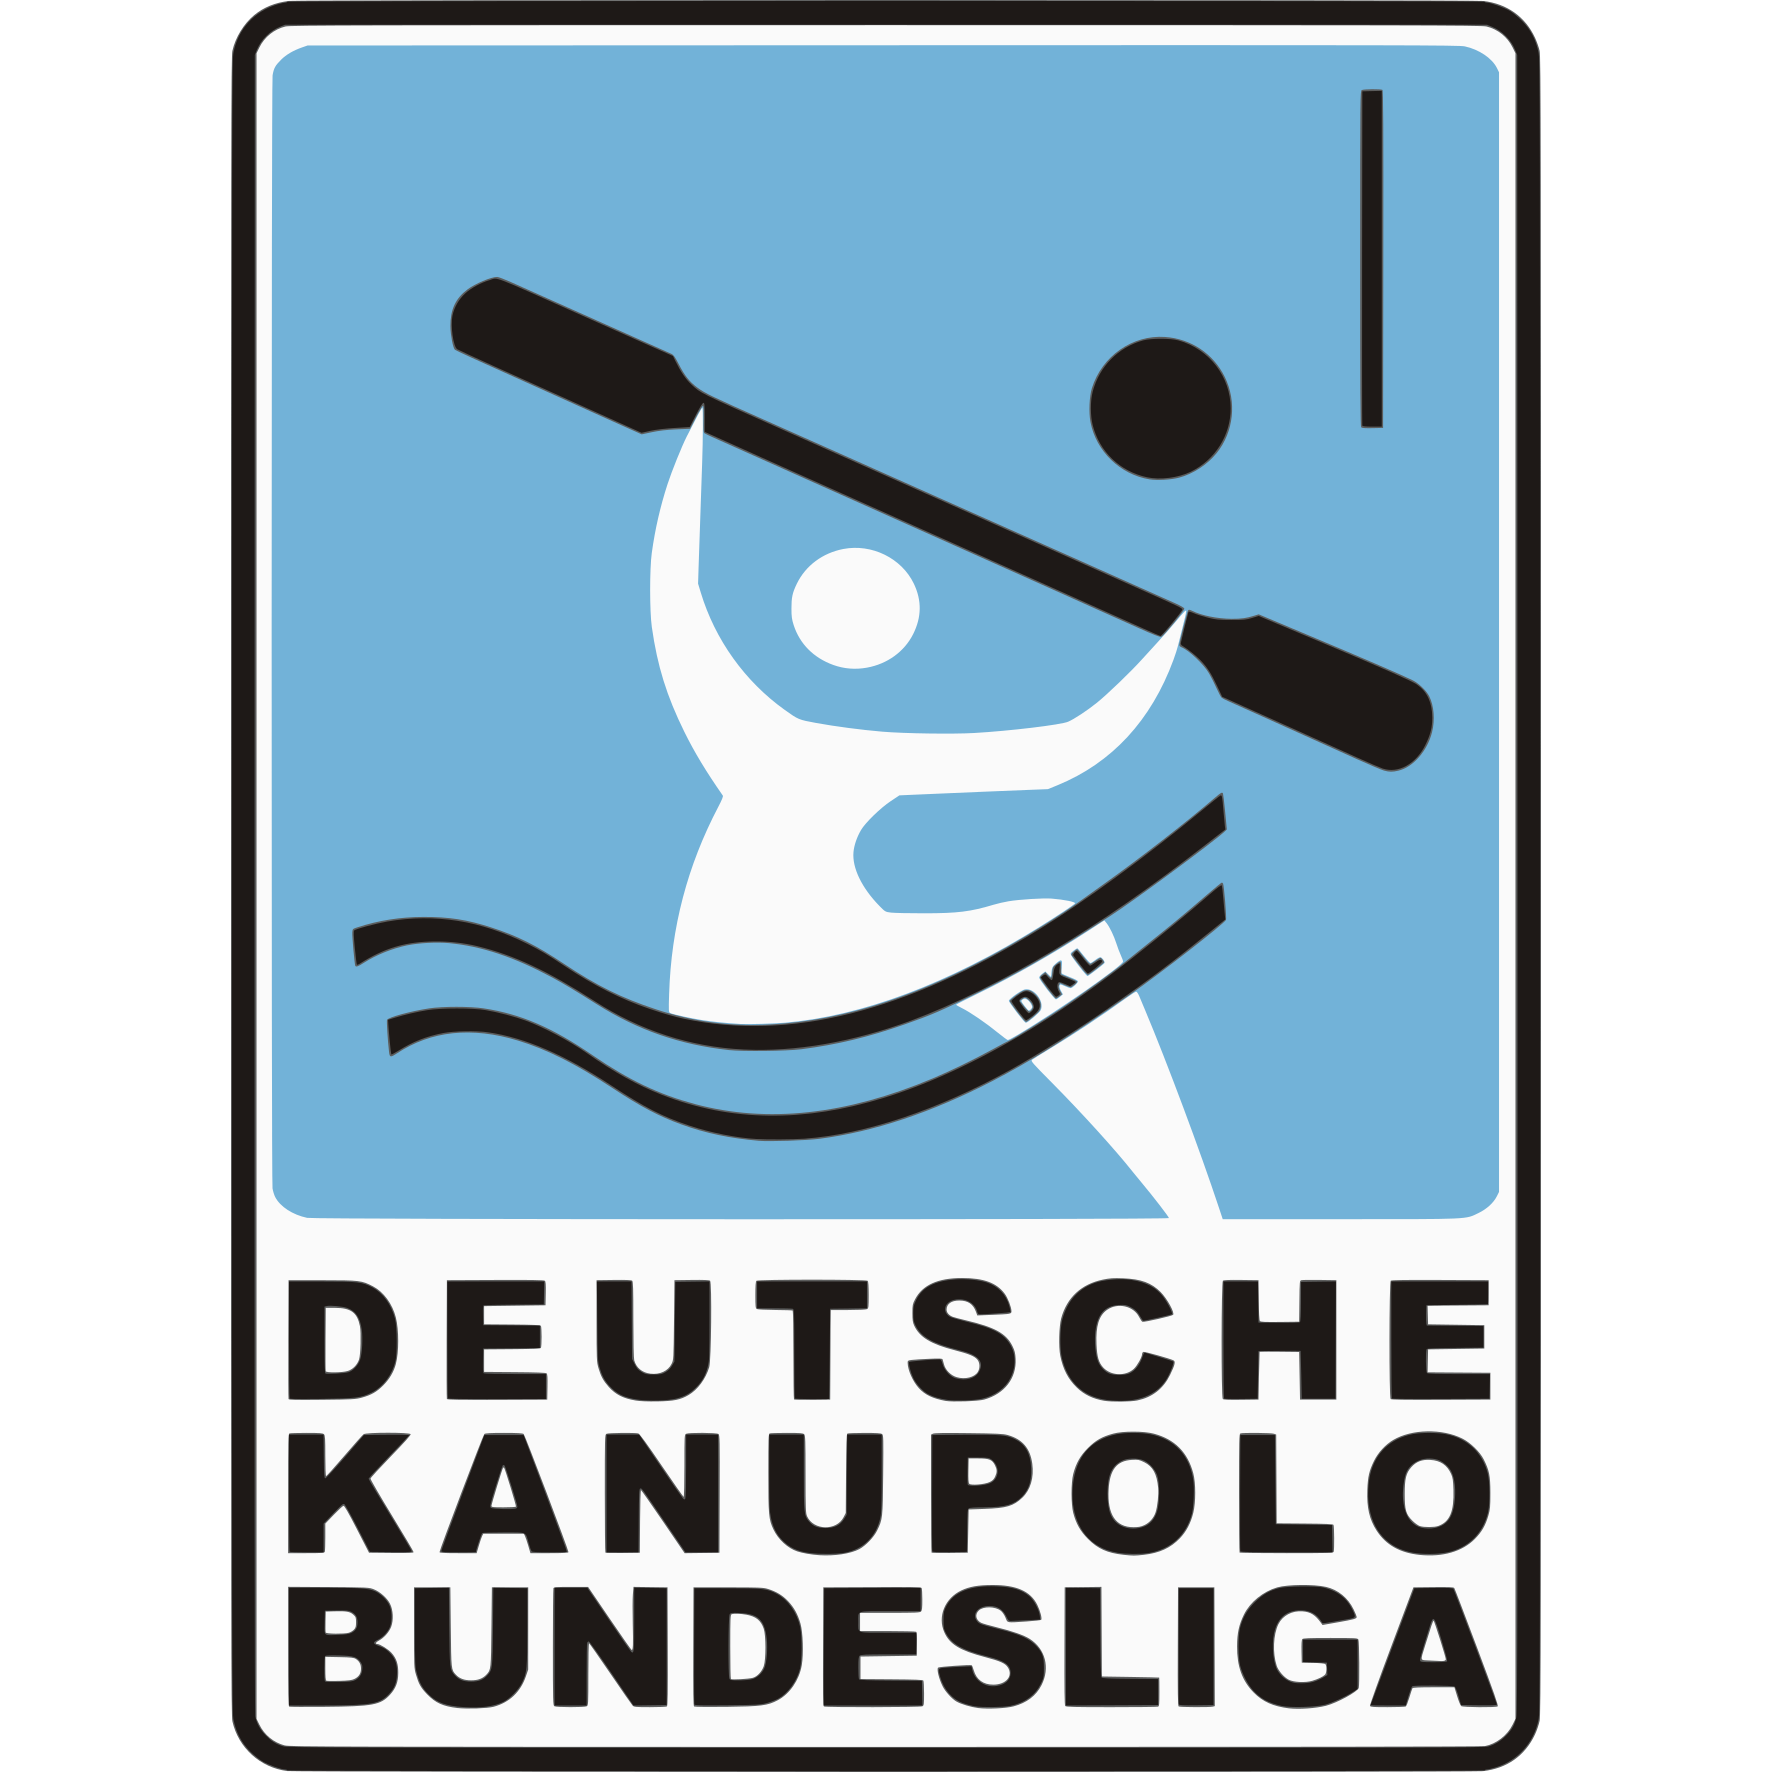 Bild: Bundesliga Logo